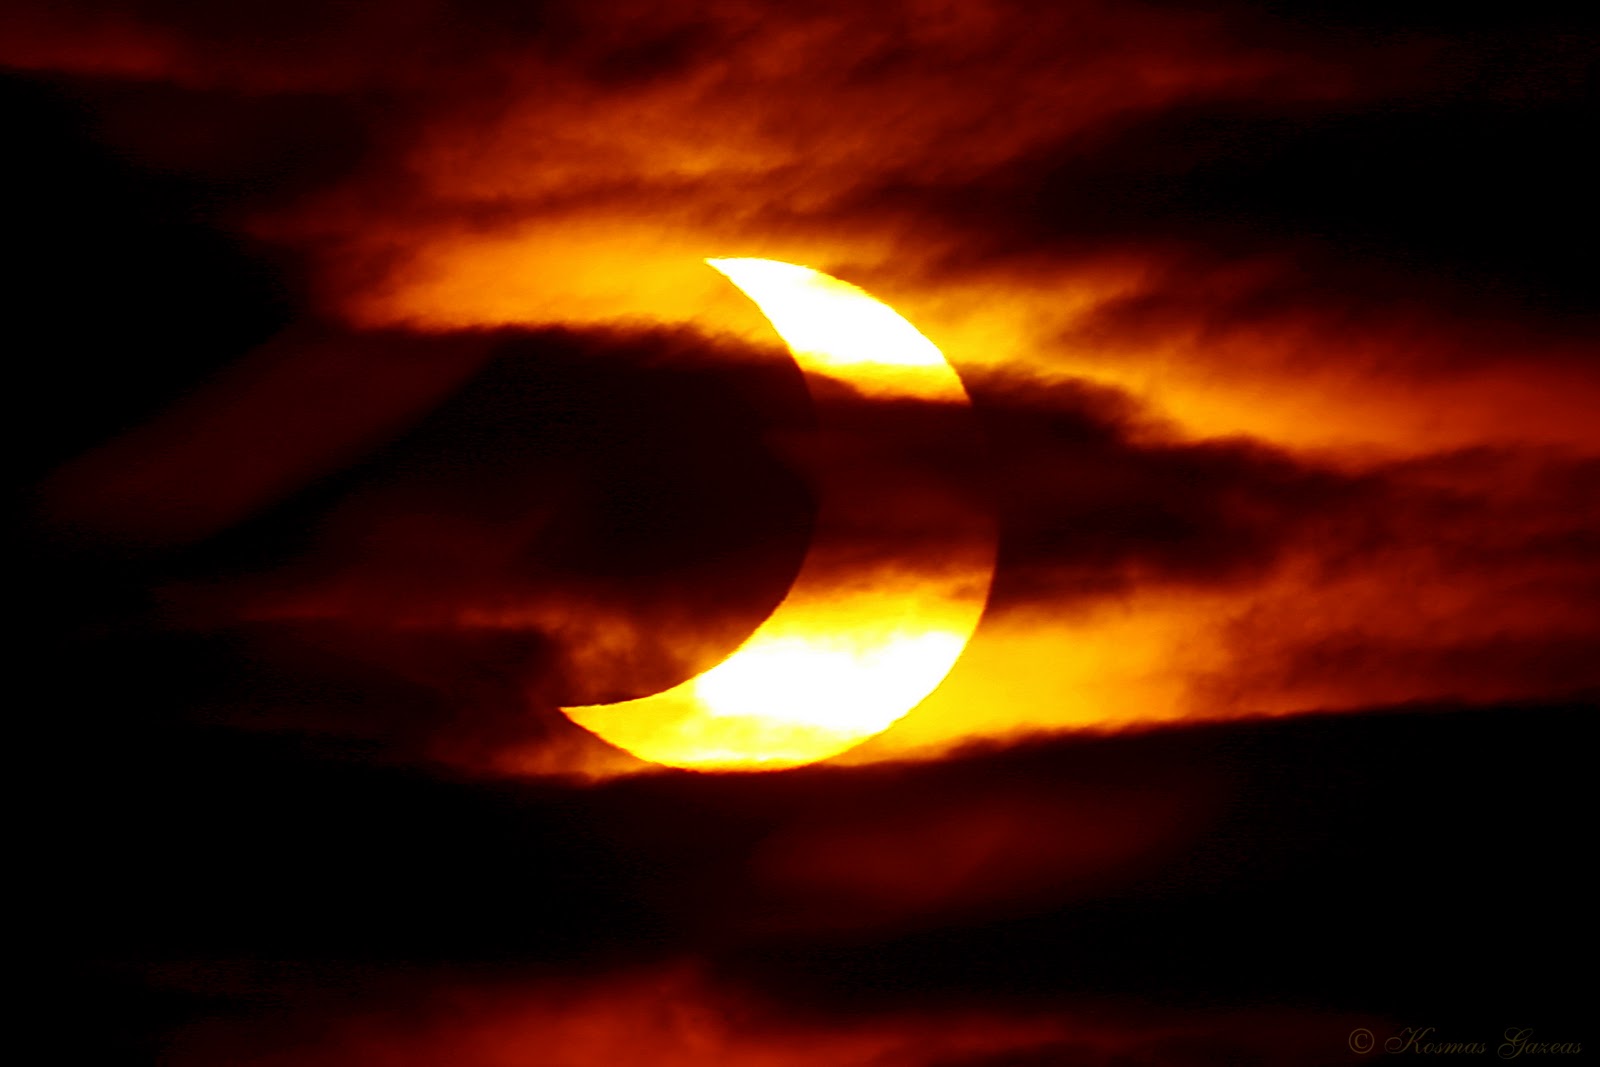 Eclipse seen from ESTEC.jpg